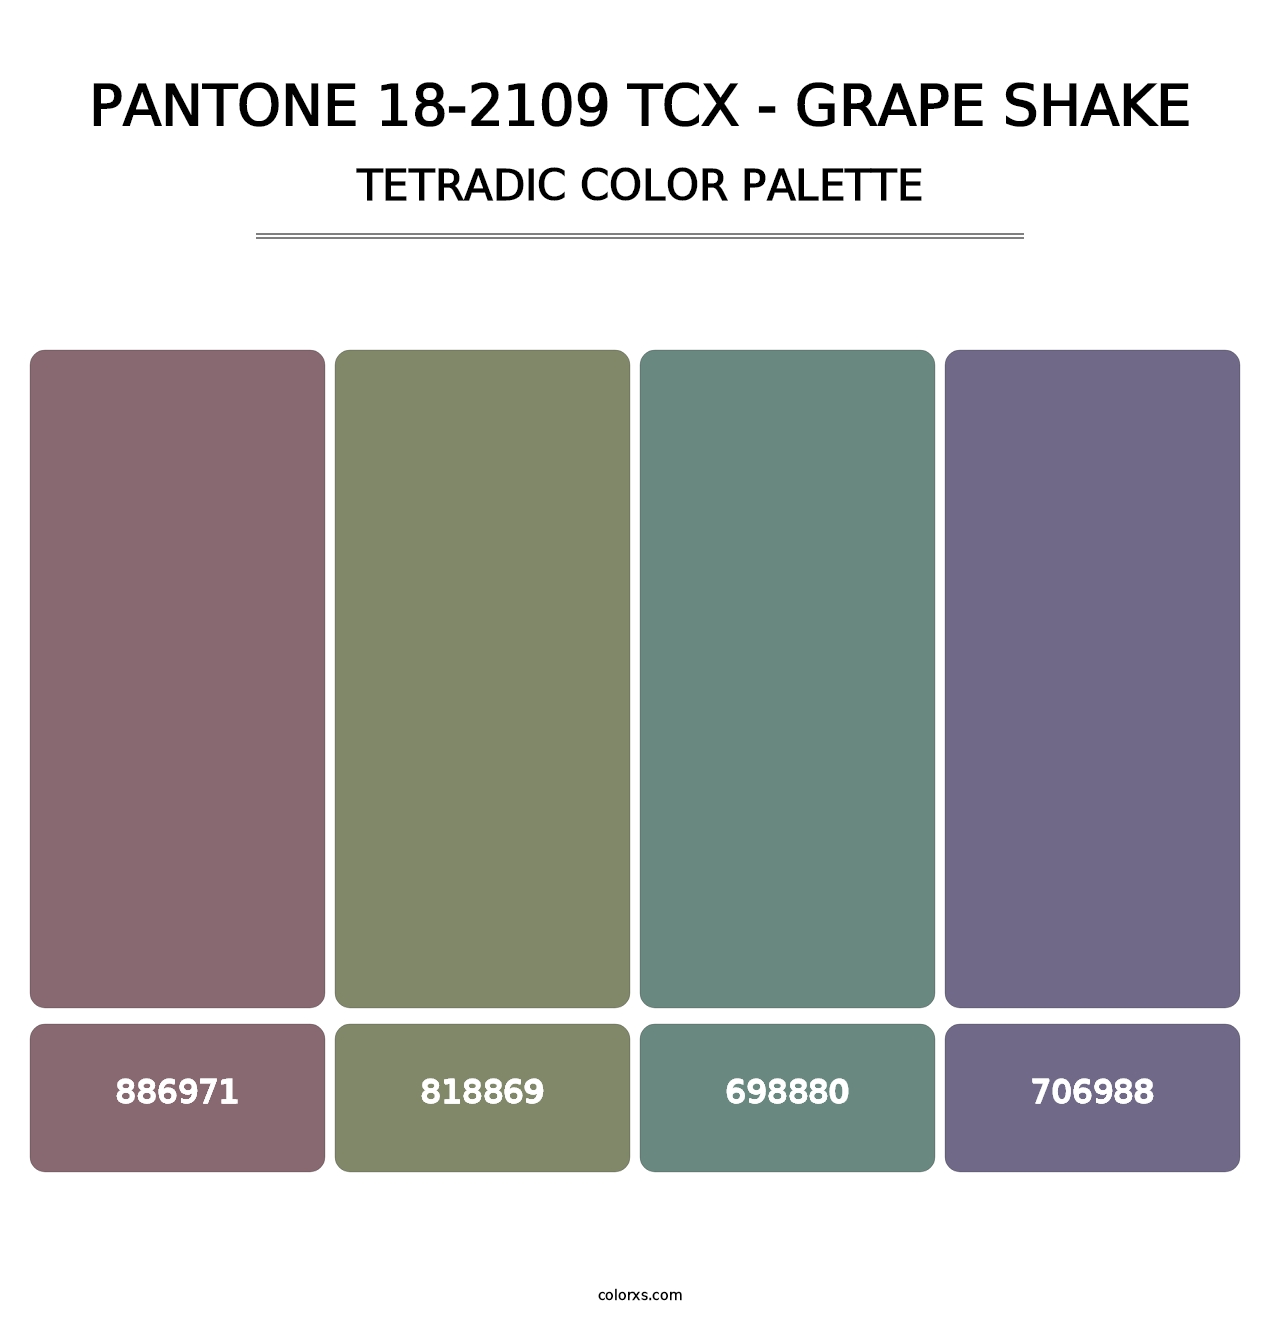 PANTONE 18-2109 TCX - Grape Shake - Tetradic Color Palette